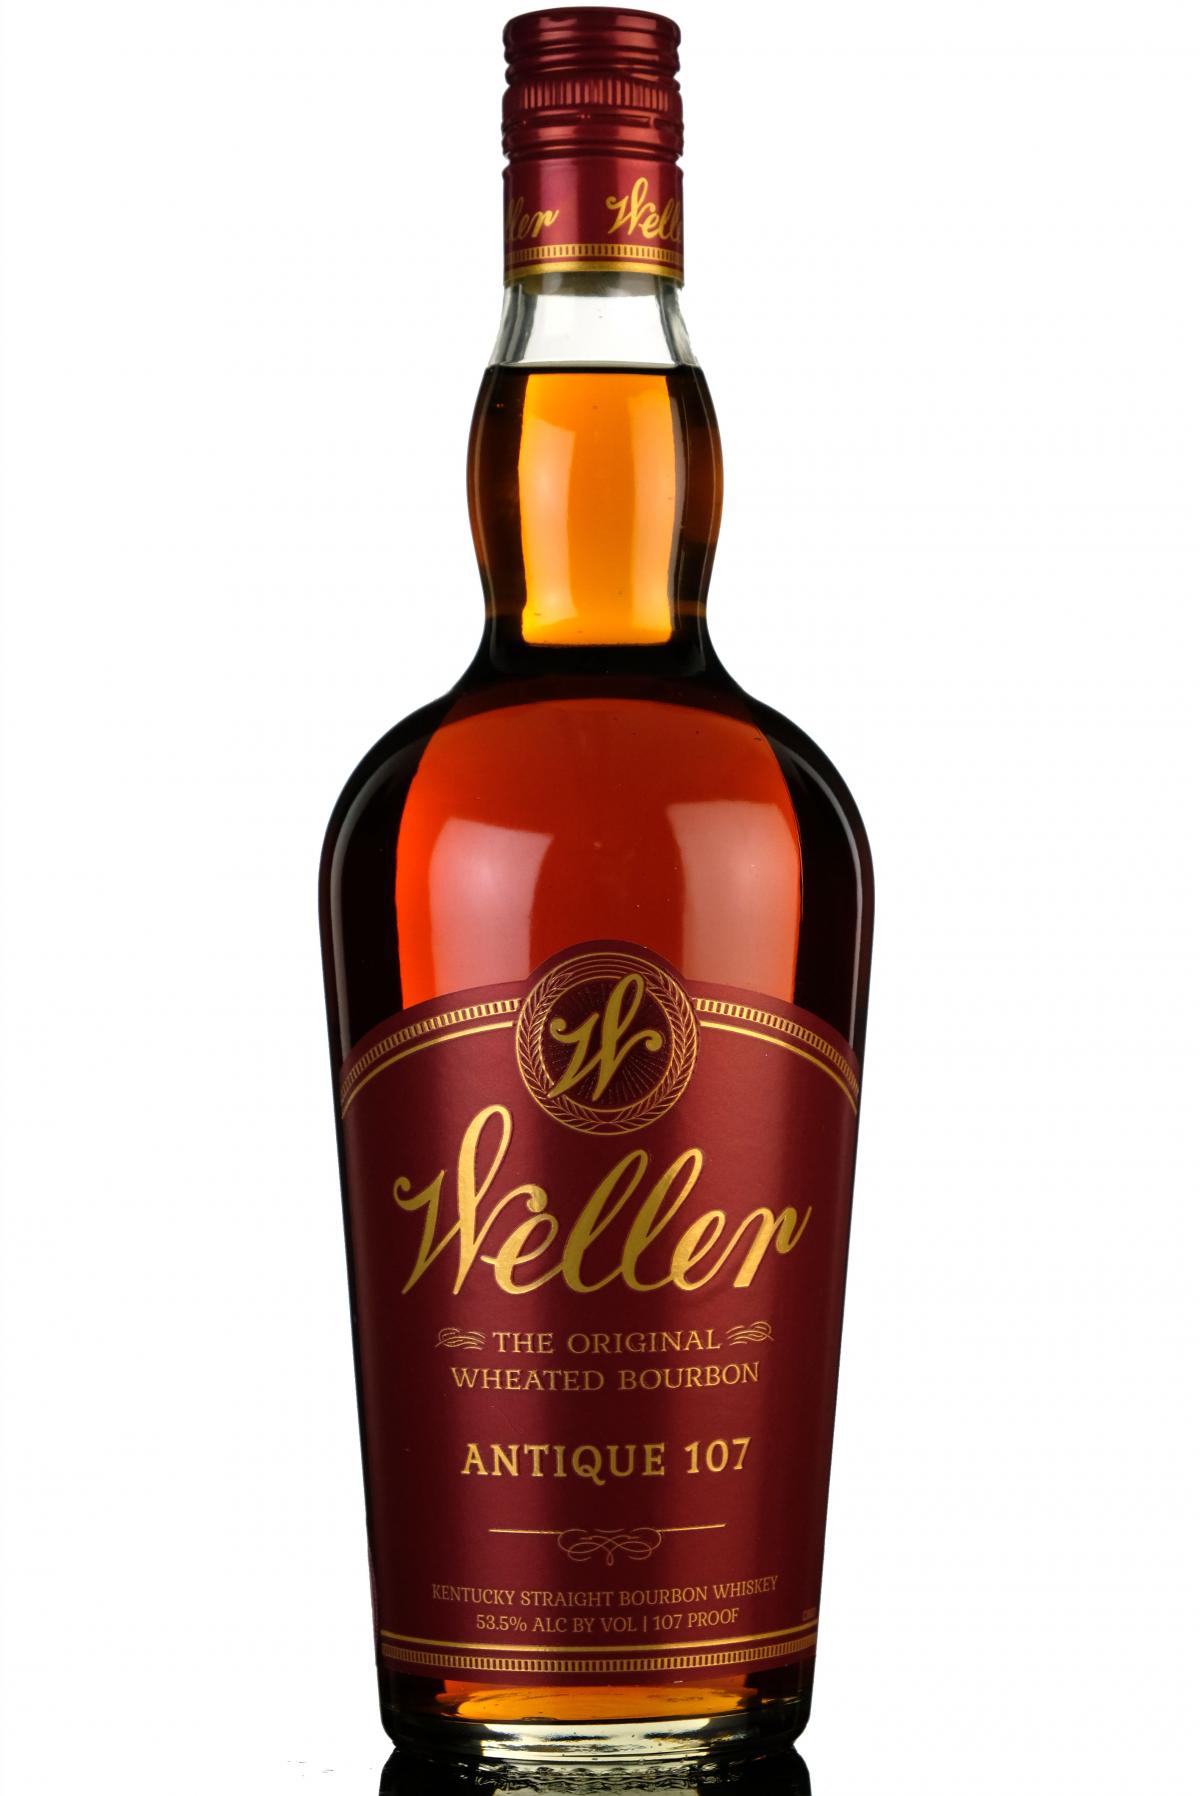 Weller The Original - Kentucky Straight Bourbon Whiskey